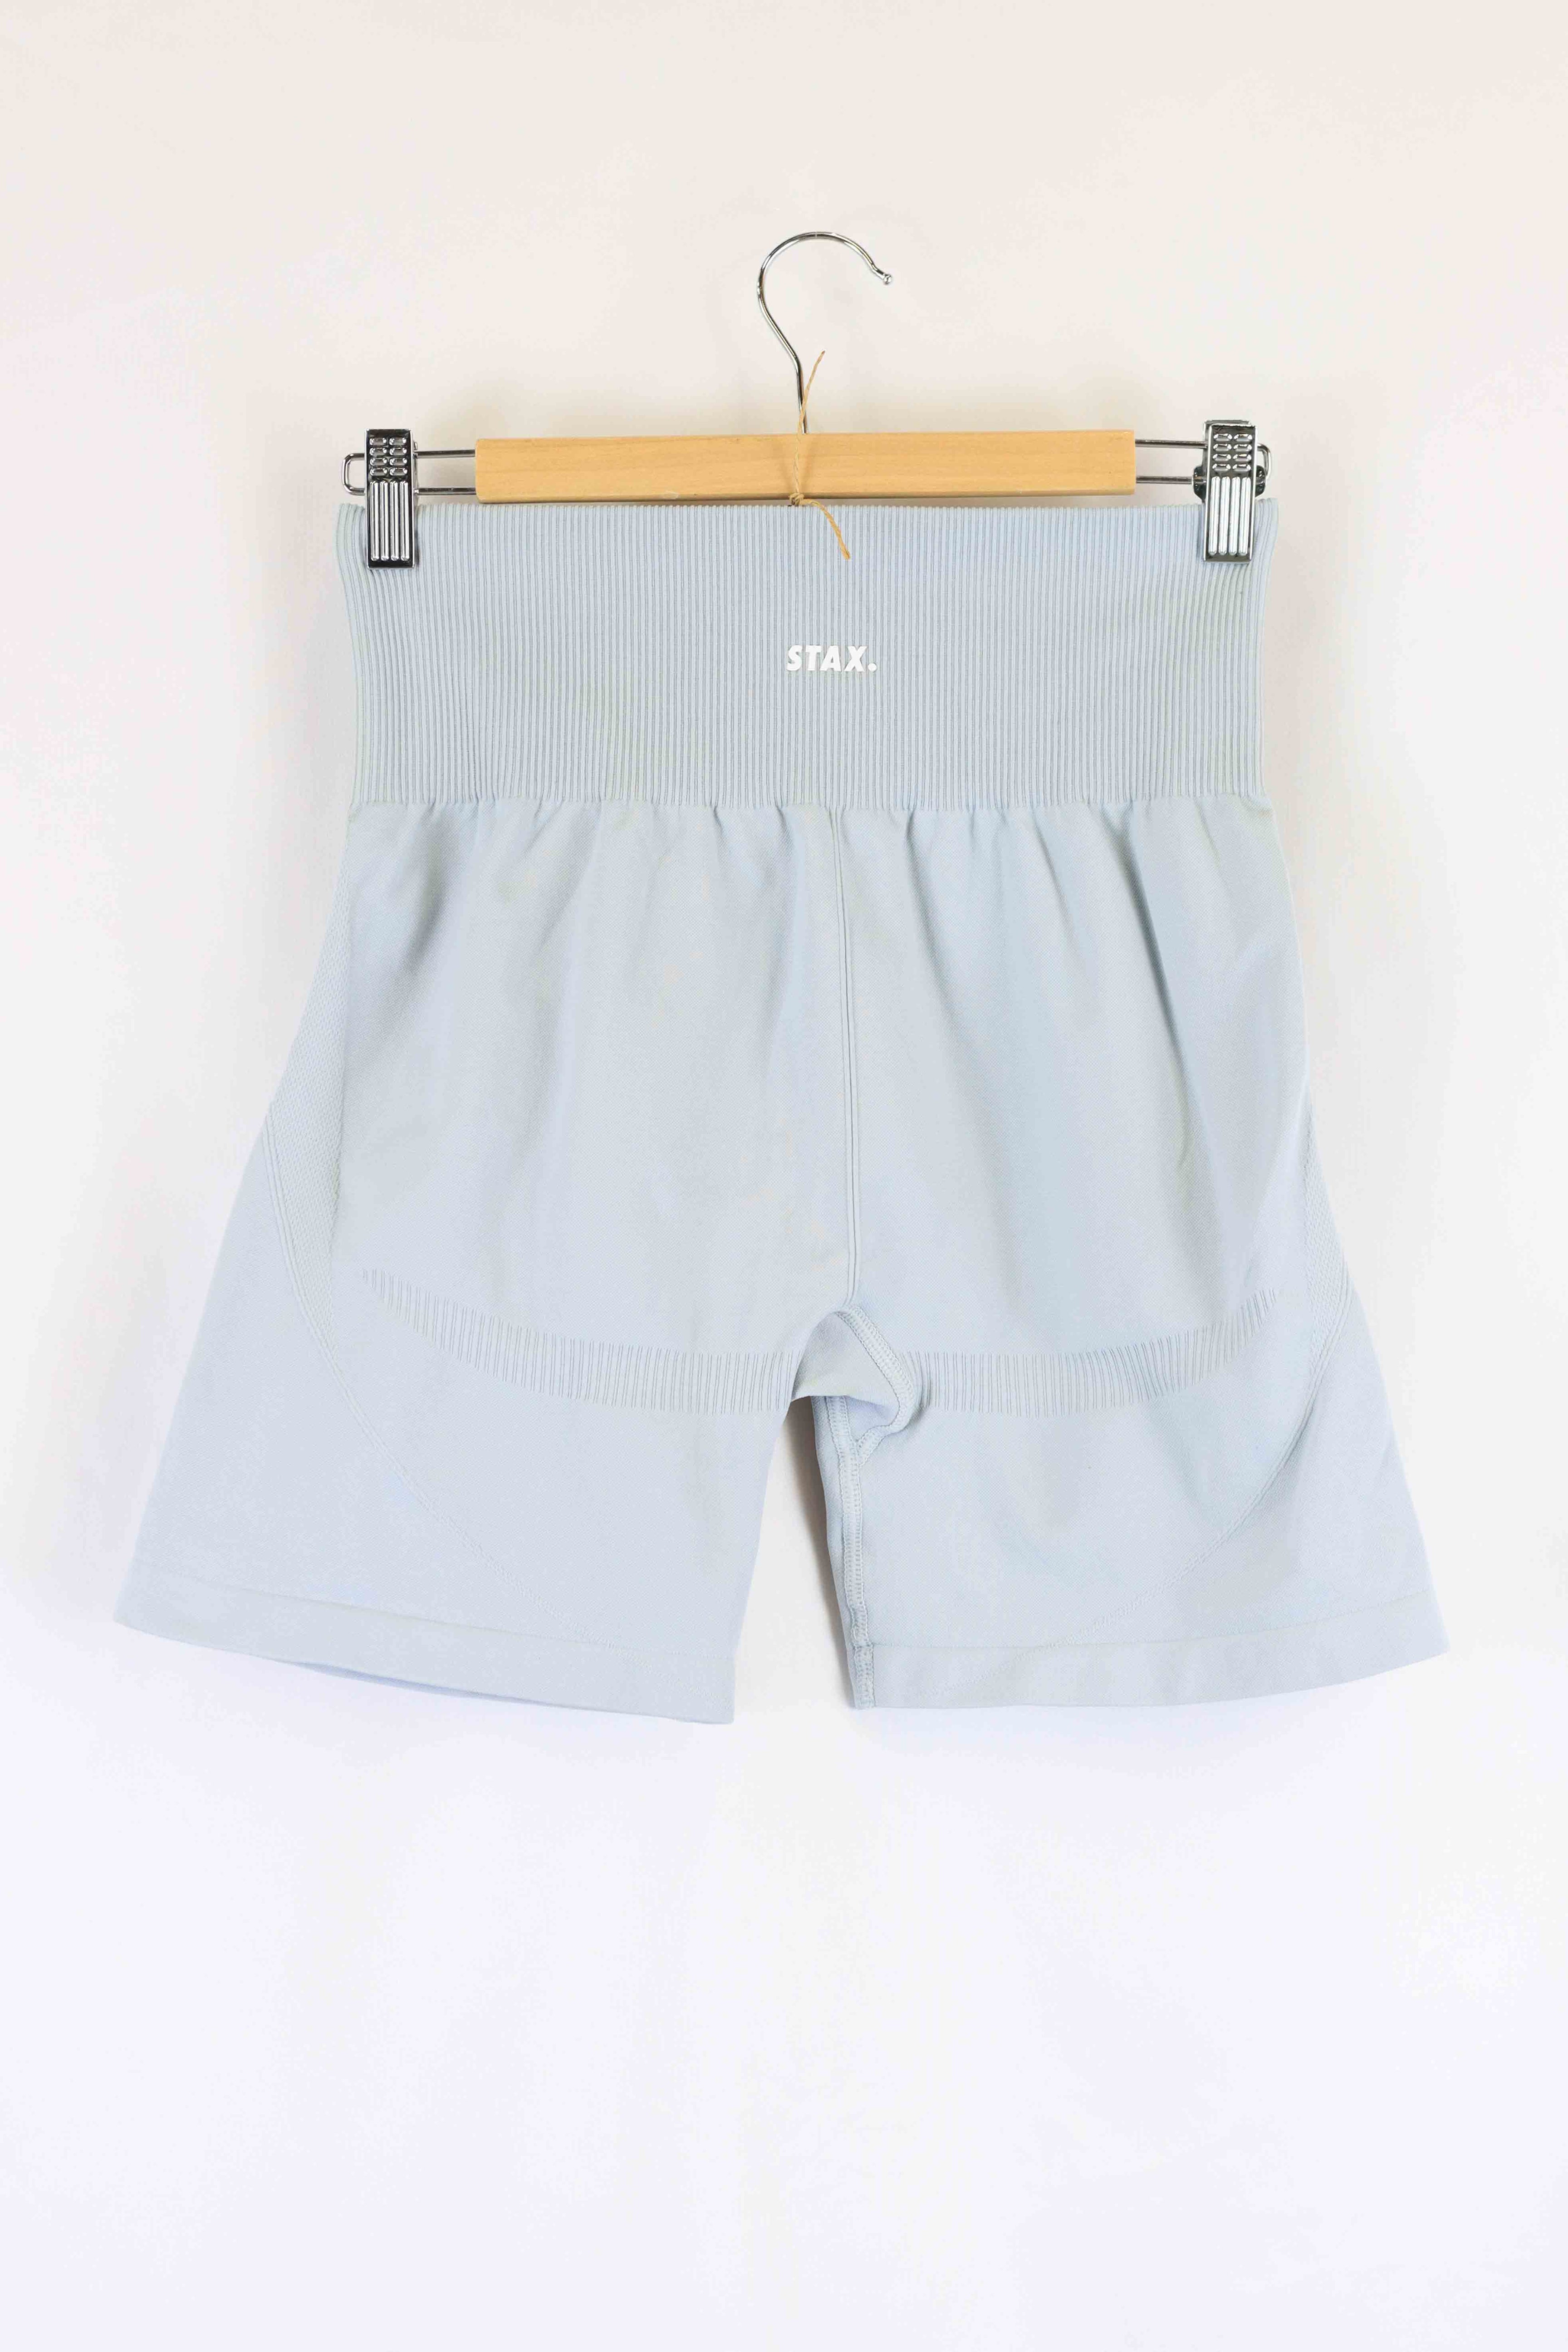 AYBL Blue Bike Shorts XS - Reluv Clothing Australia